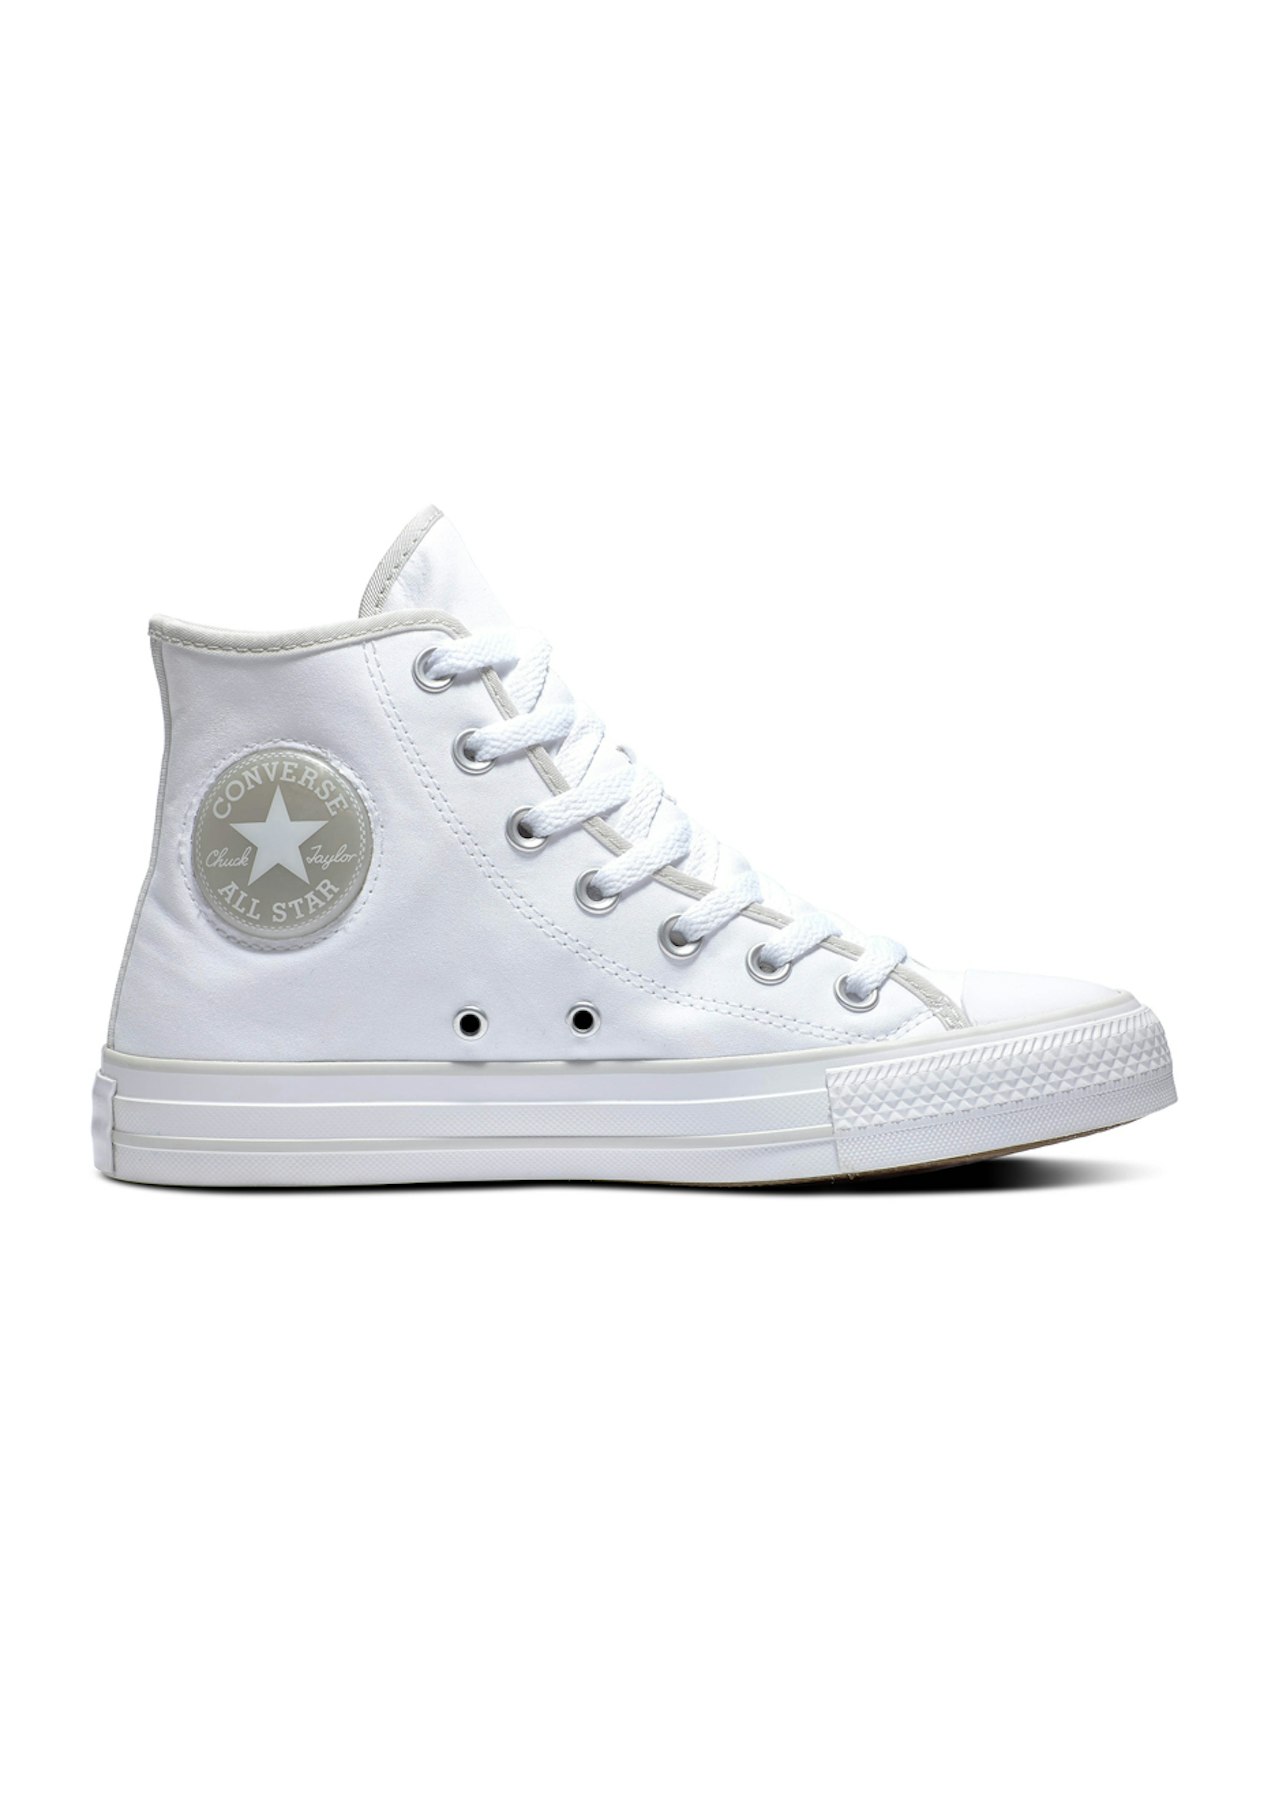 Converse - Womens Chuck Taylor All Star High Top Sneaker Millenium Glam -  White/Light Bone/White - Onceit